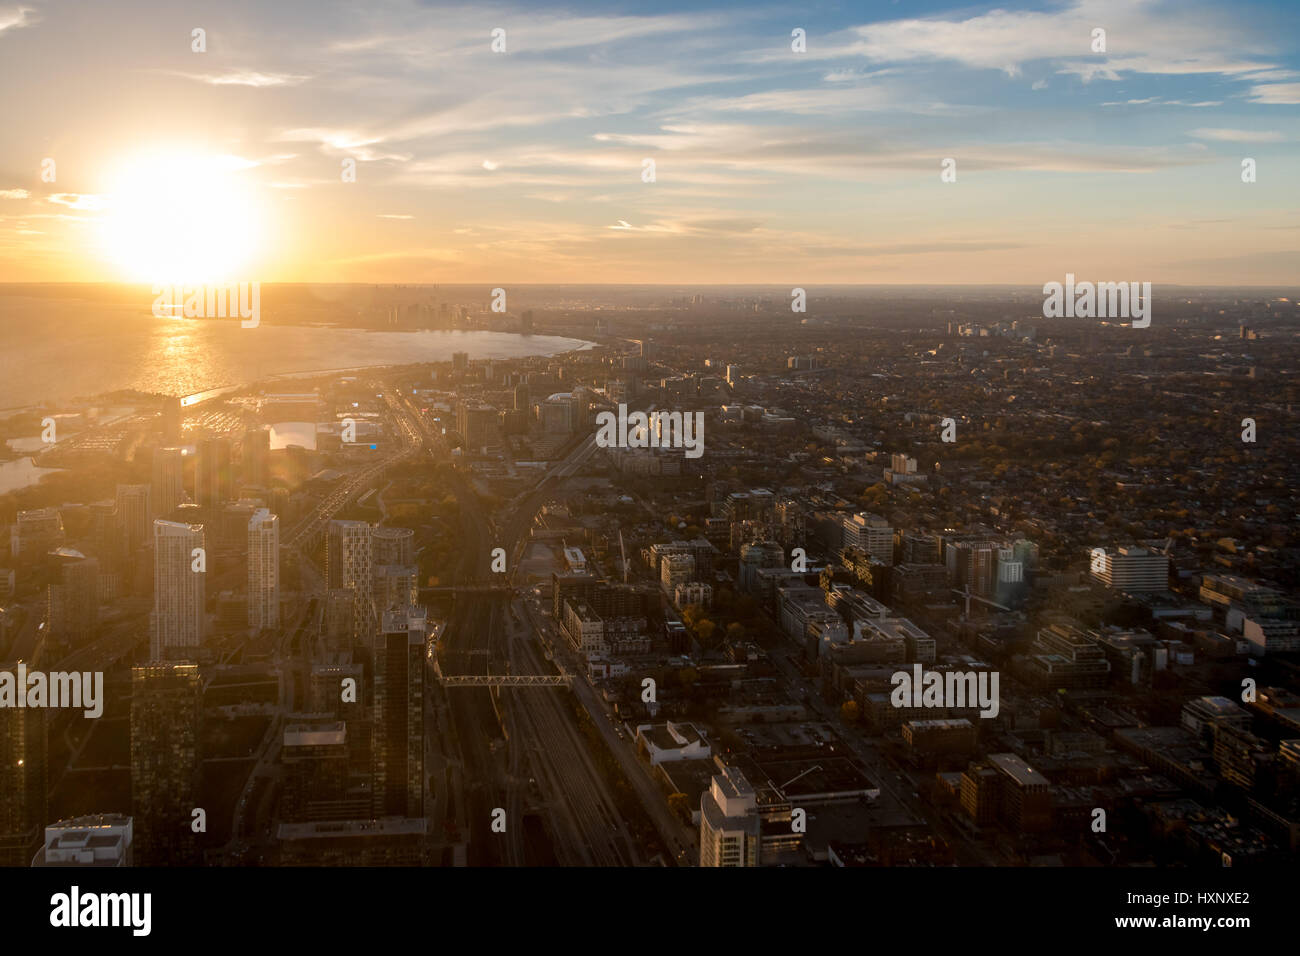 Sunset view of Toronto City from above - Toronto, Ontario, Canada Stock Photo